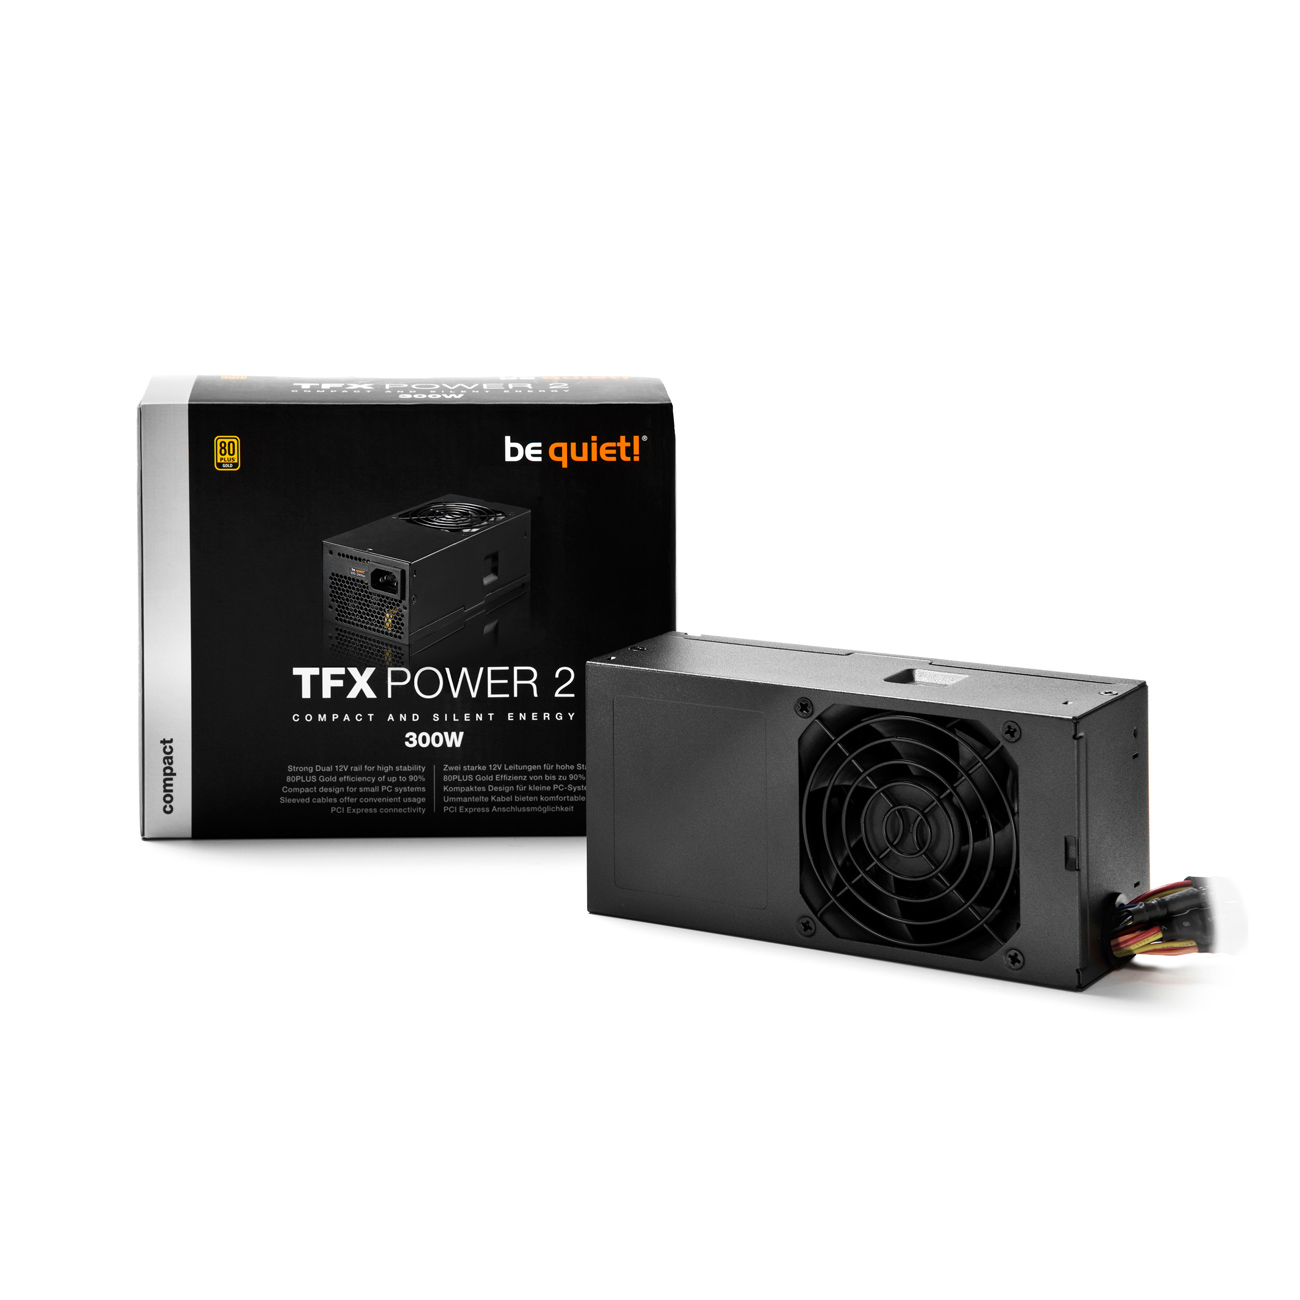 2 BE 300 Watt TFX POWER PC-Netzteil QUIET